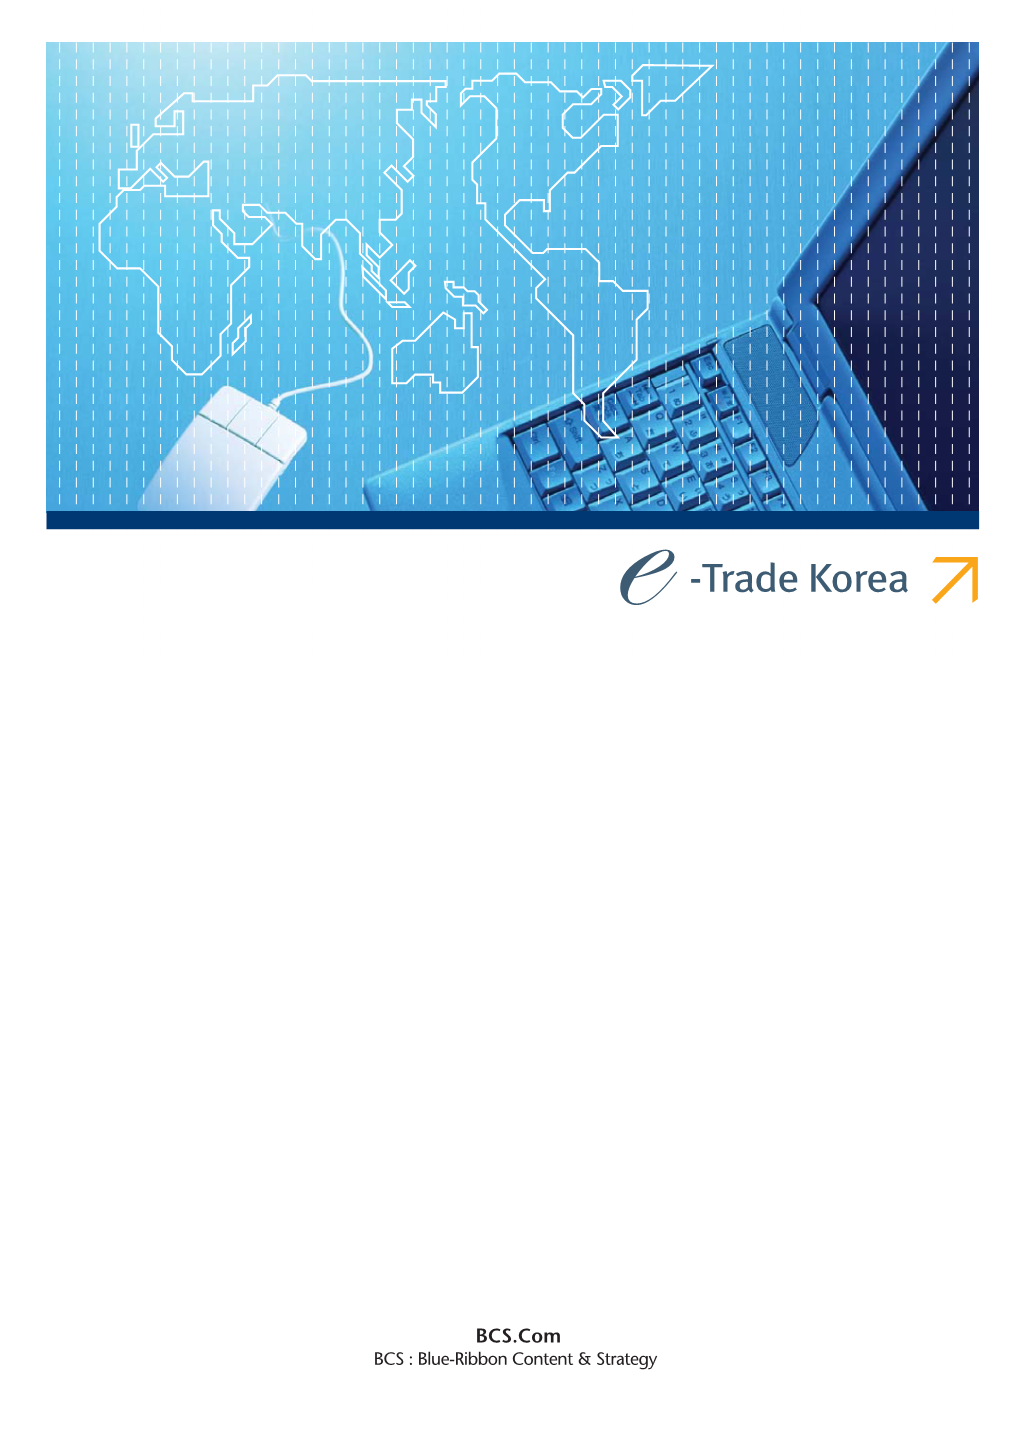 X-Trade Korea